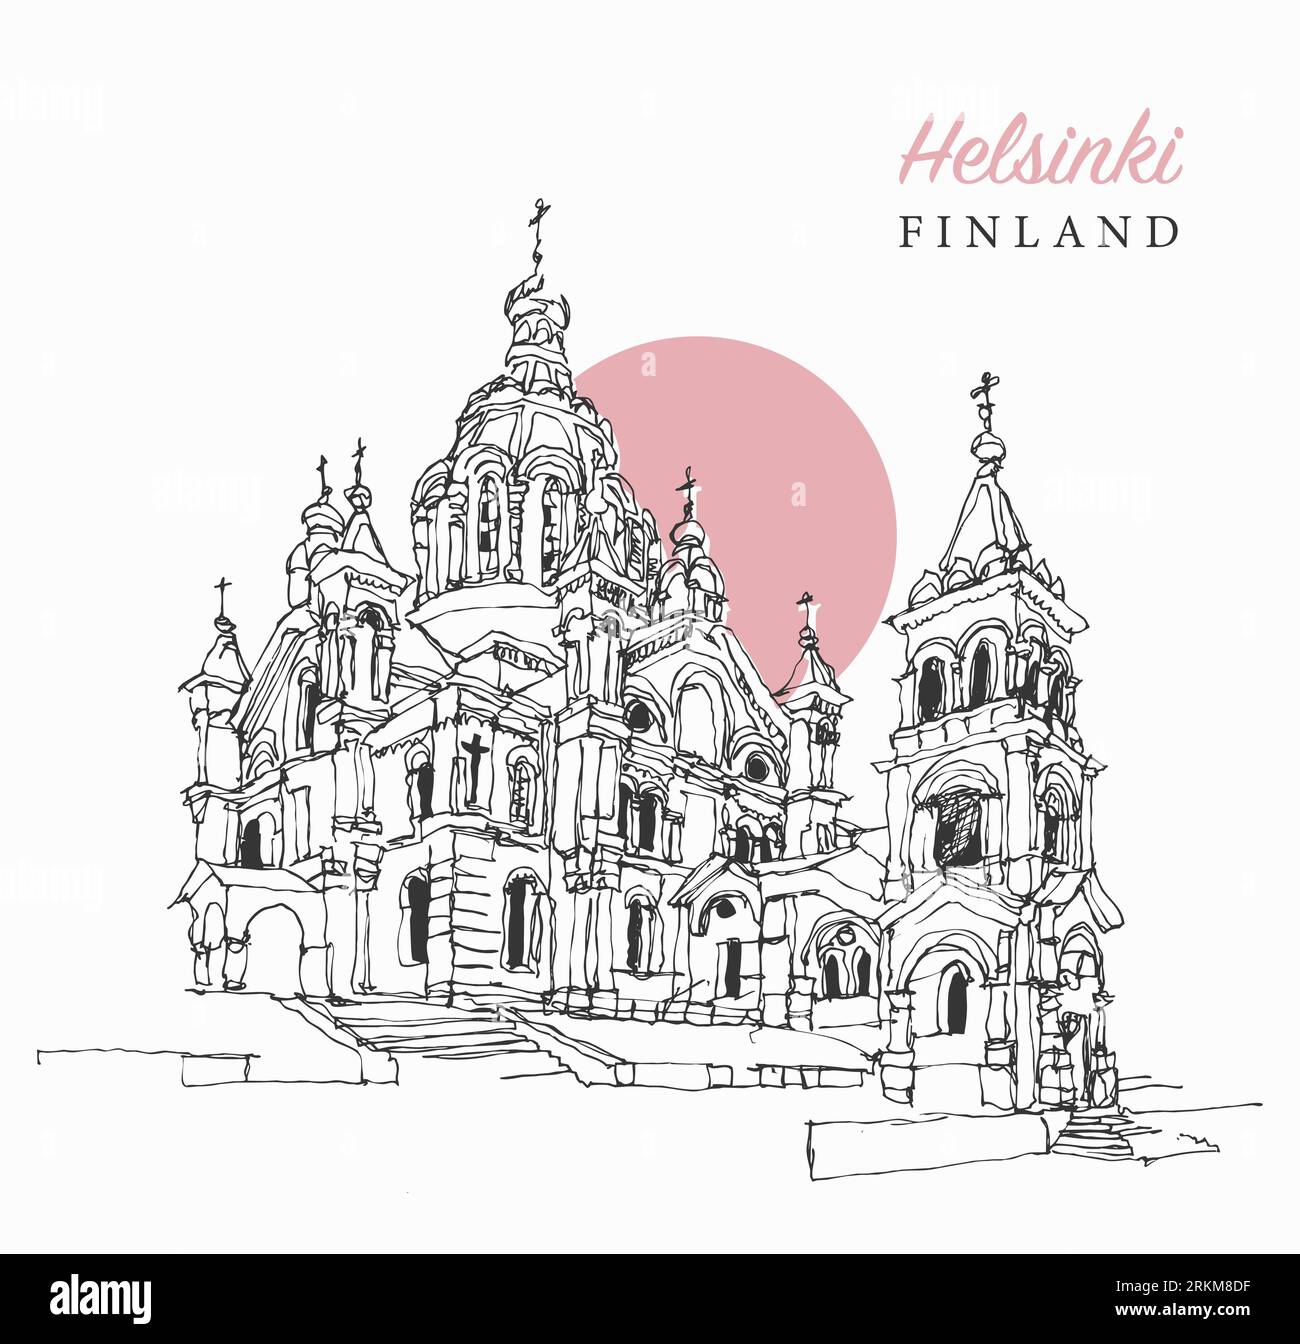 Vektor-handgezeichnete Skizzenillustration der Uspenski-Kathedrale in Helsinki, Finnland. Stockfoto